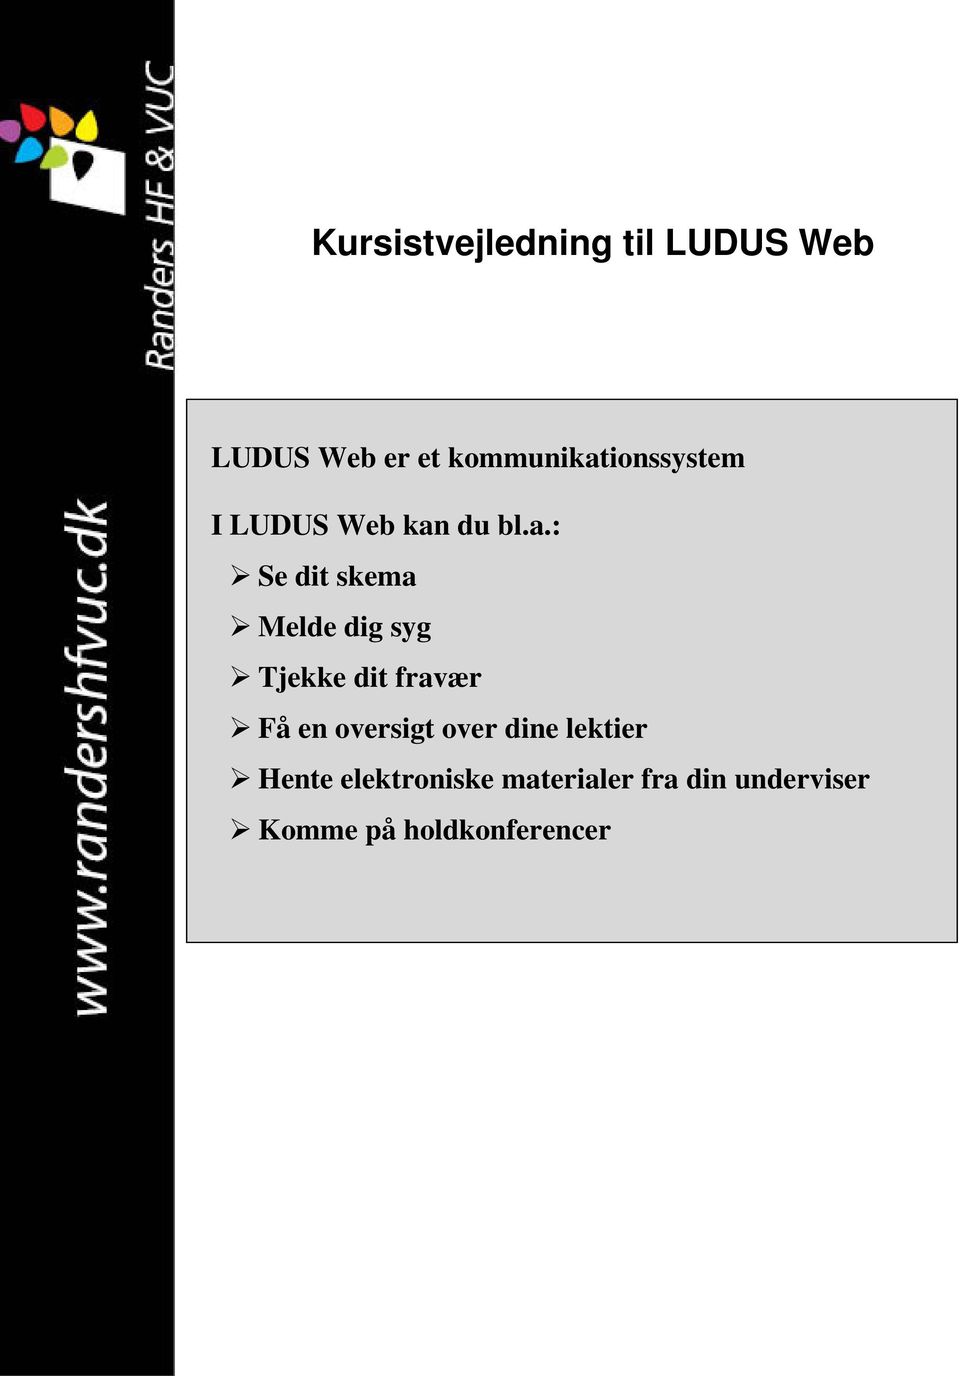 ionssystem I LUDUS Web kan